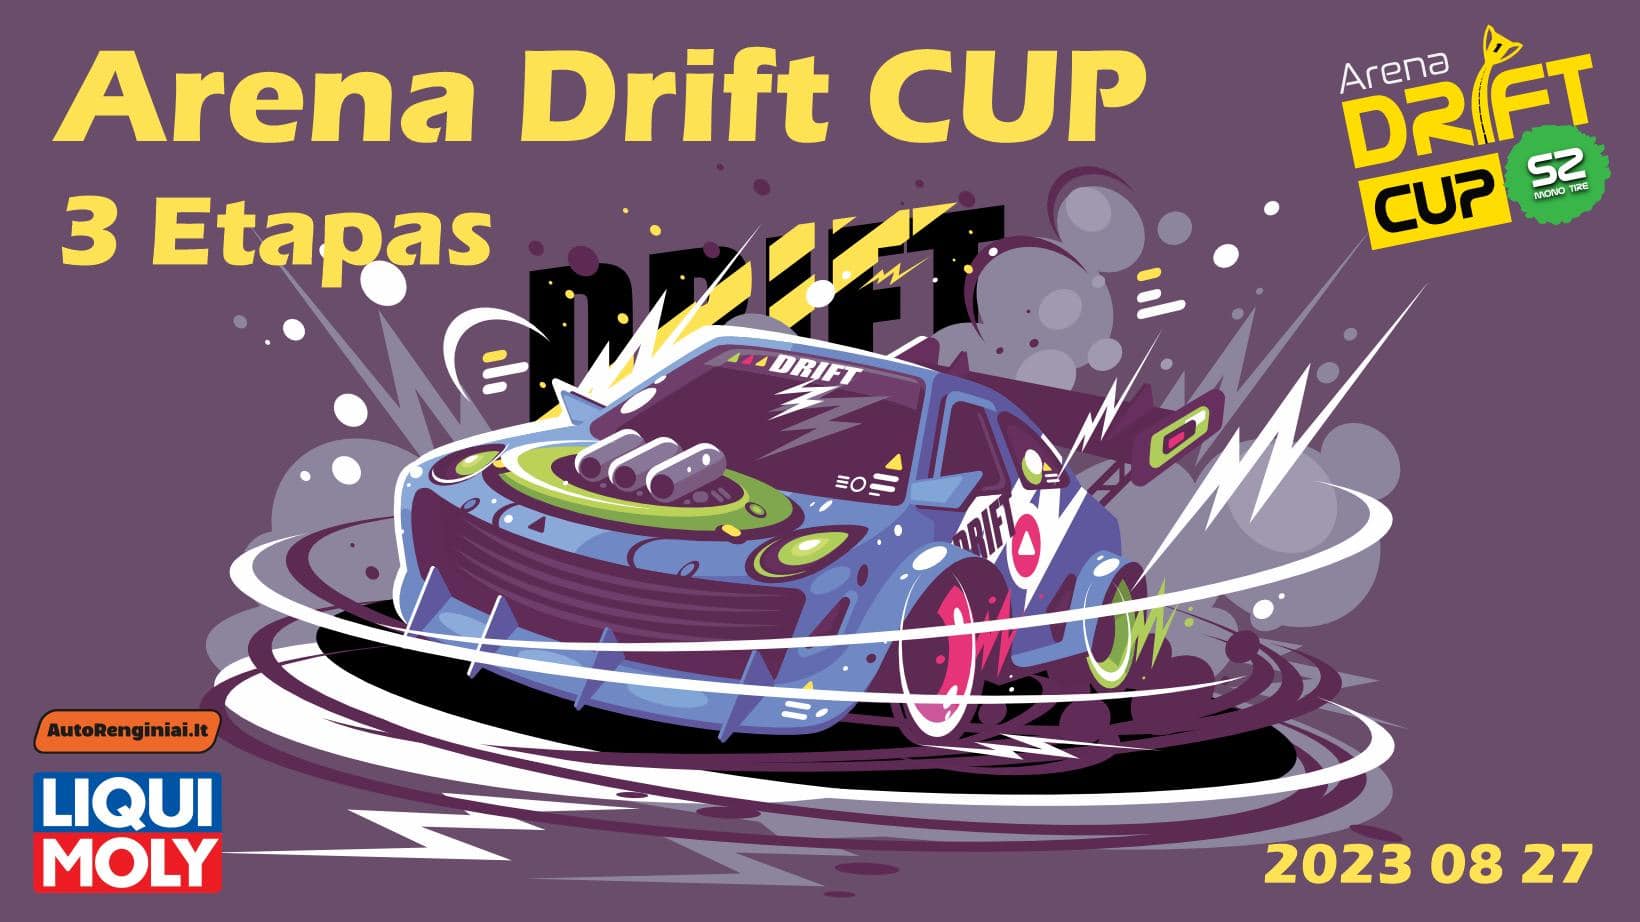 Arena Drift CUP 3 Etapas / LIMITED TIRE DRIFT CUP